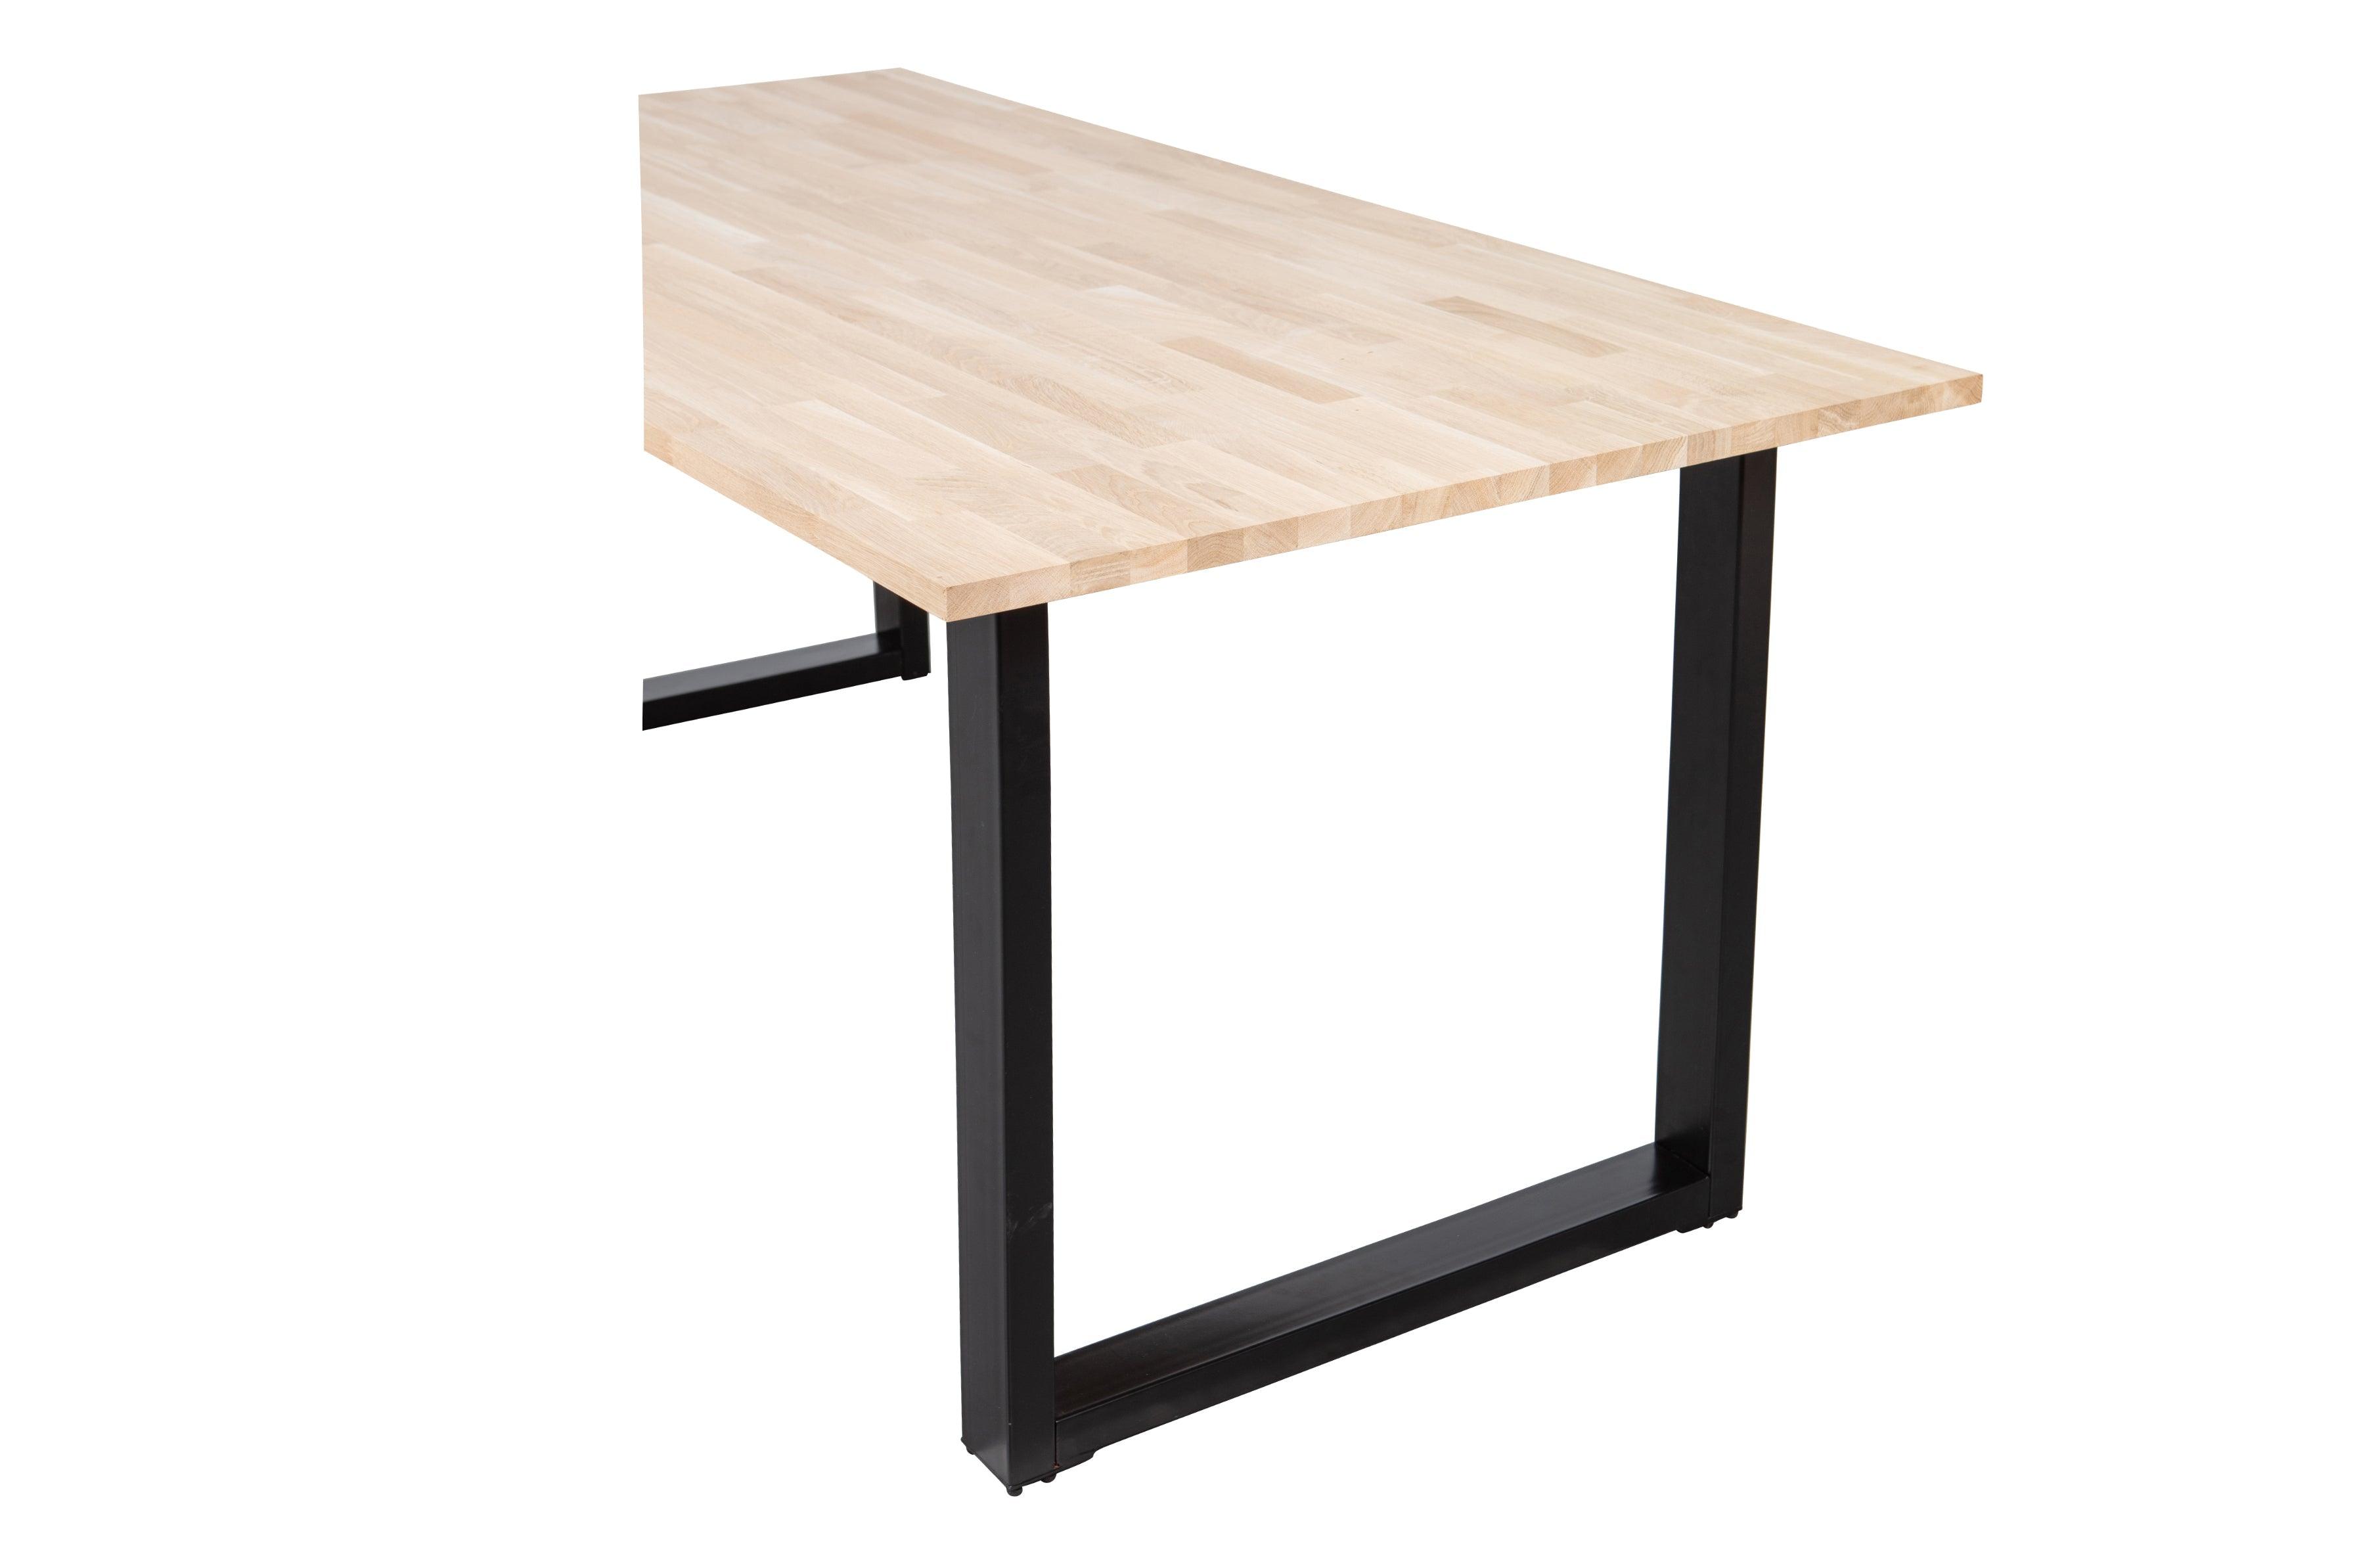 Table Table Oak 220x90 [FSC] U-LEG - PARIS14A.RO